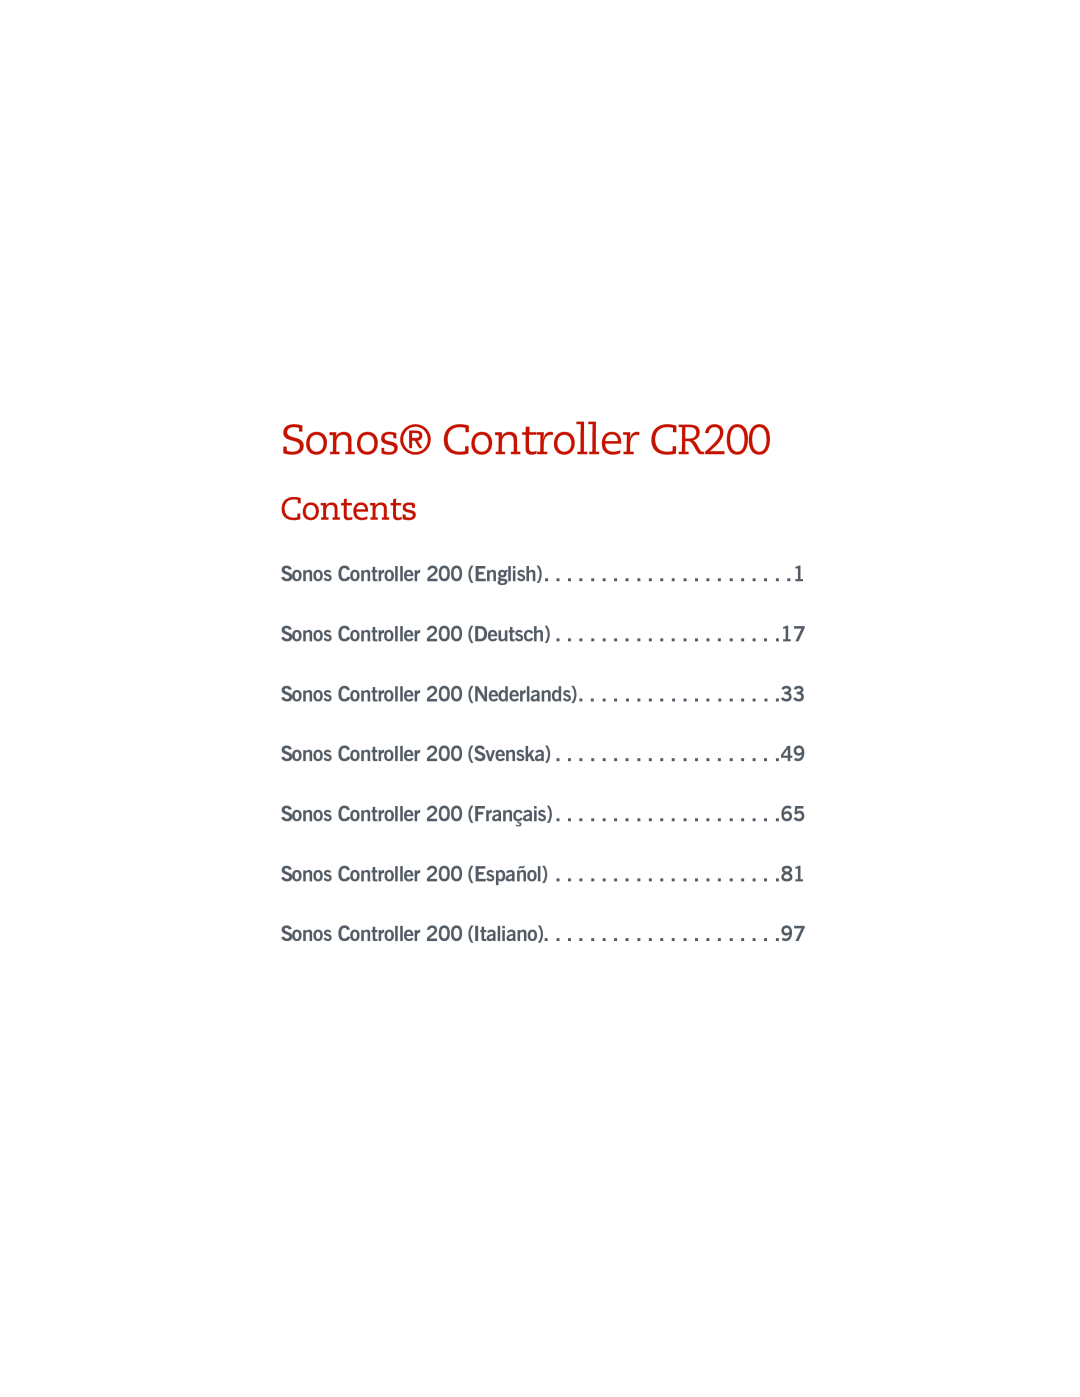 Sonos manual Contents, Sonos Controller CR200 